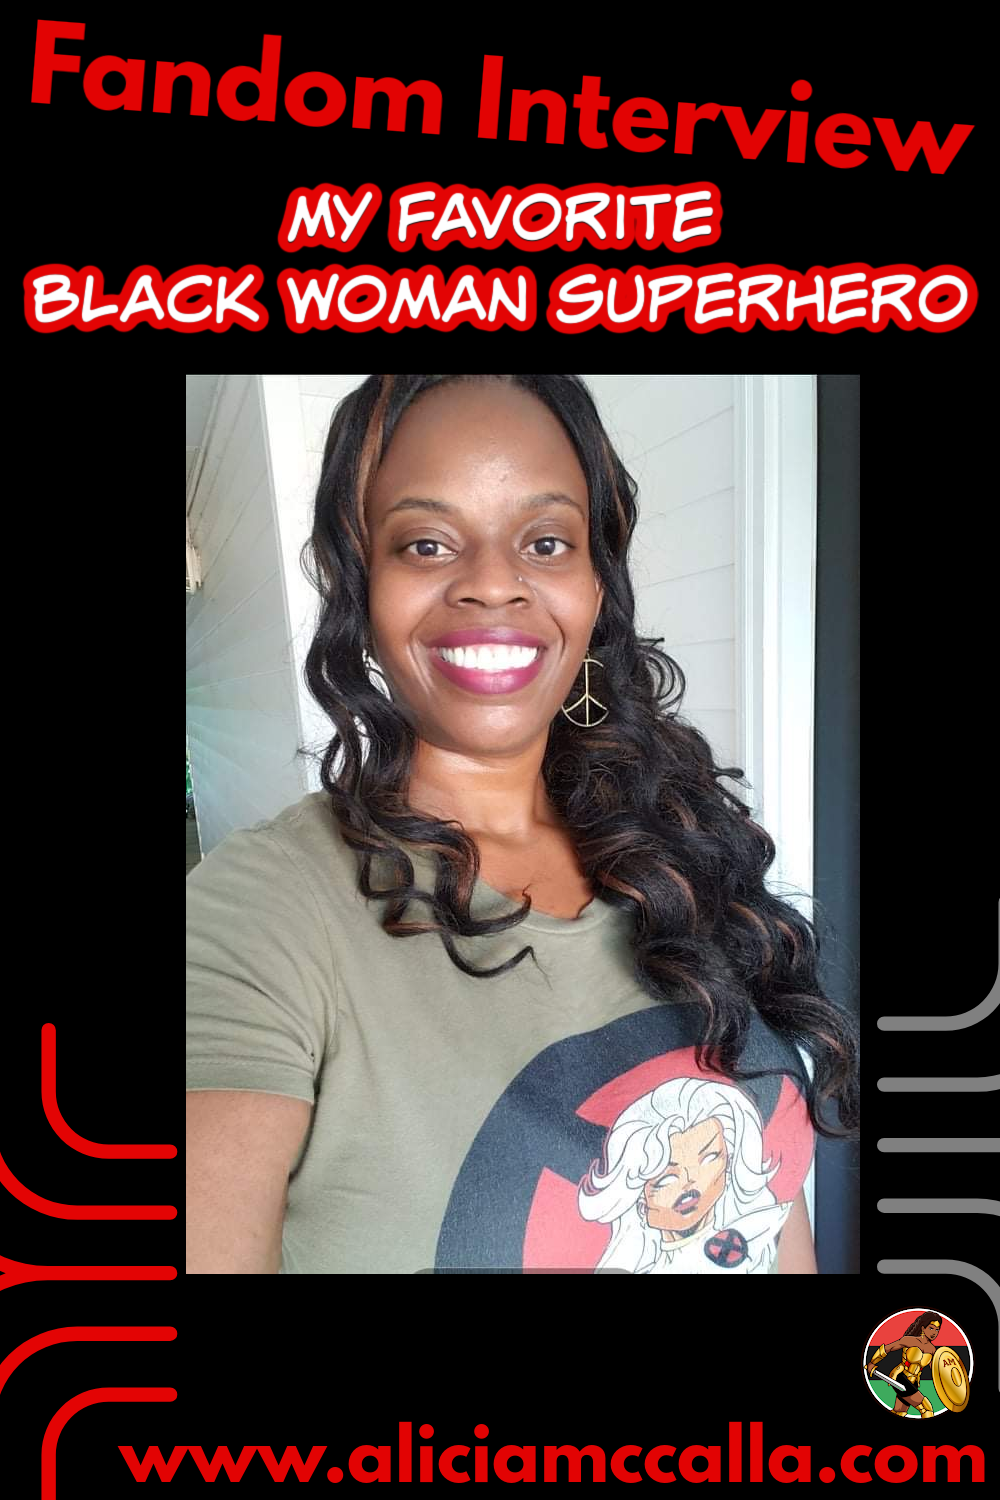 Fandom Interview: My Favorite Black Woman Superhero is…